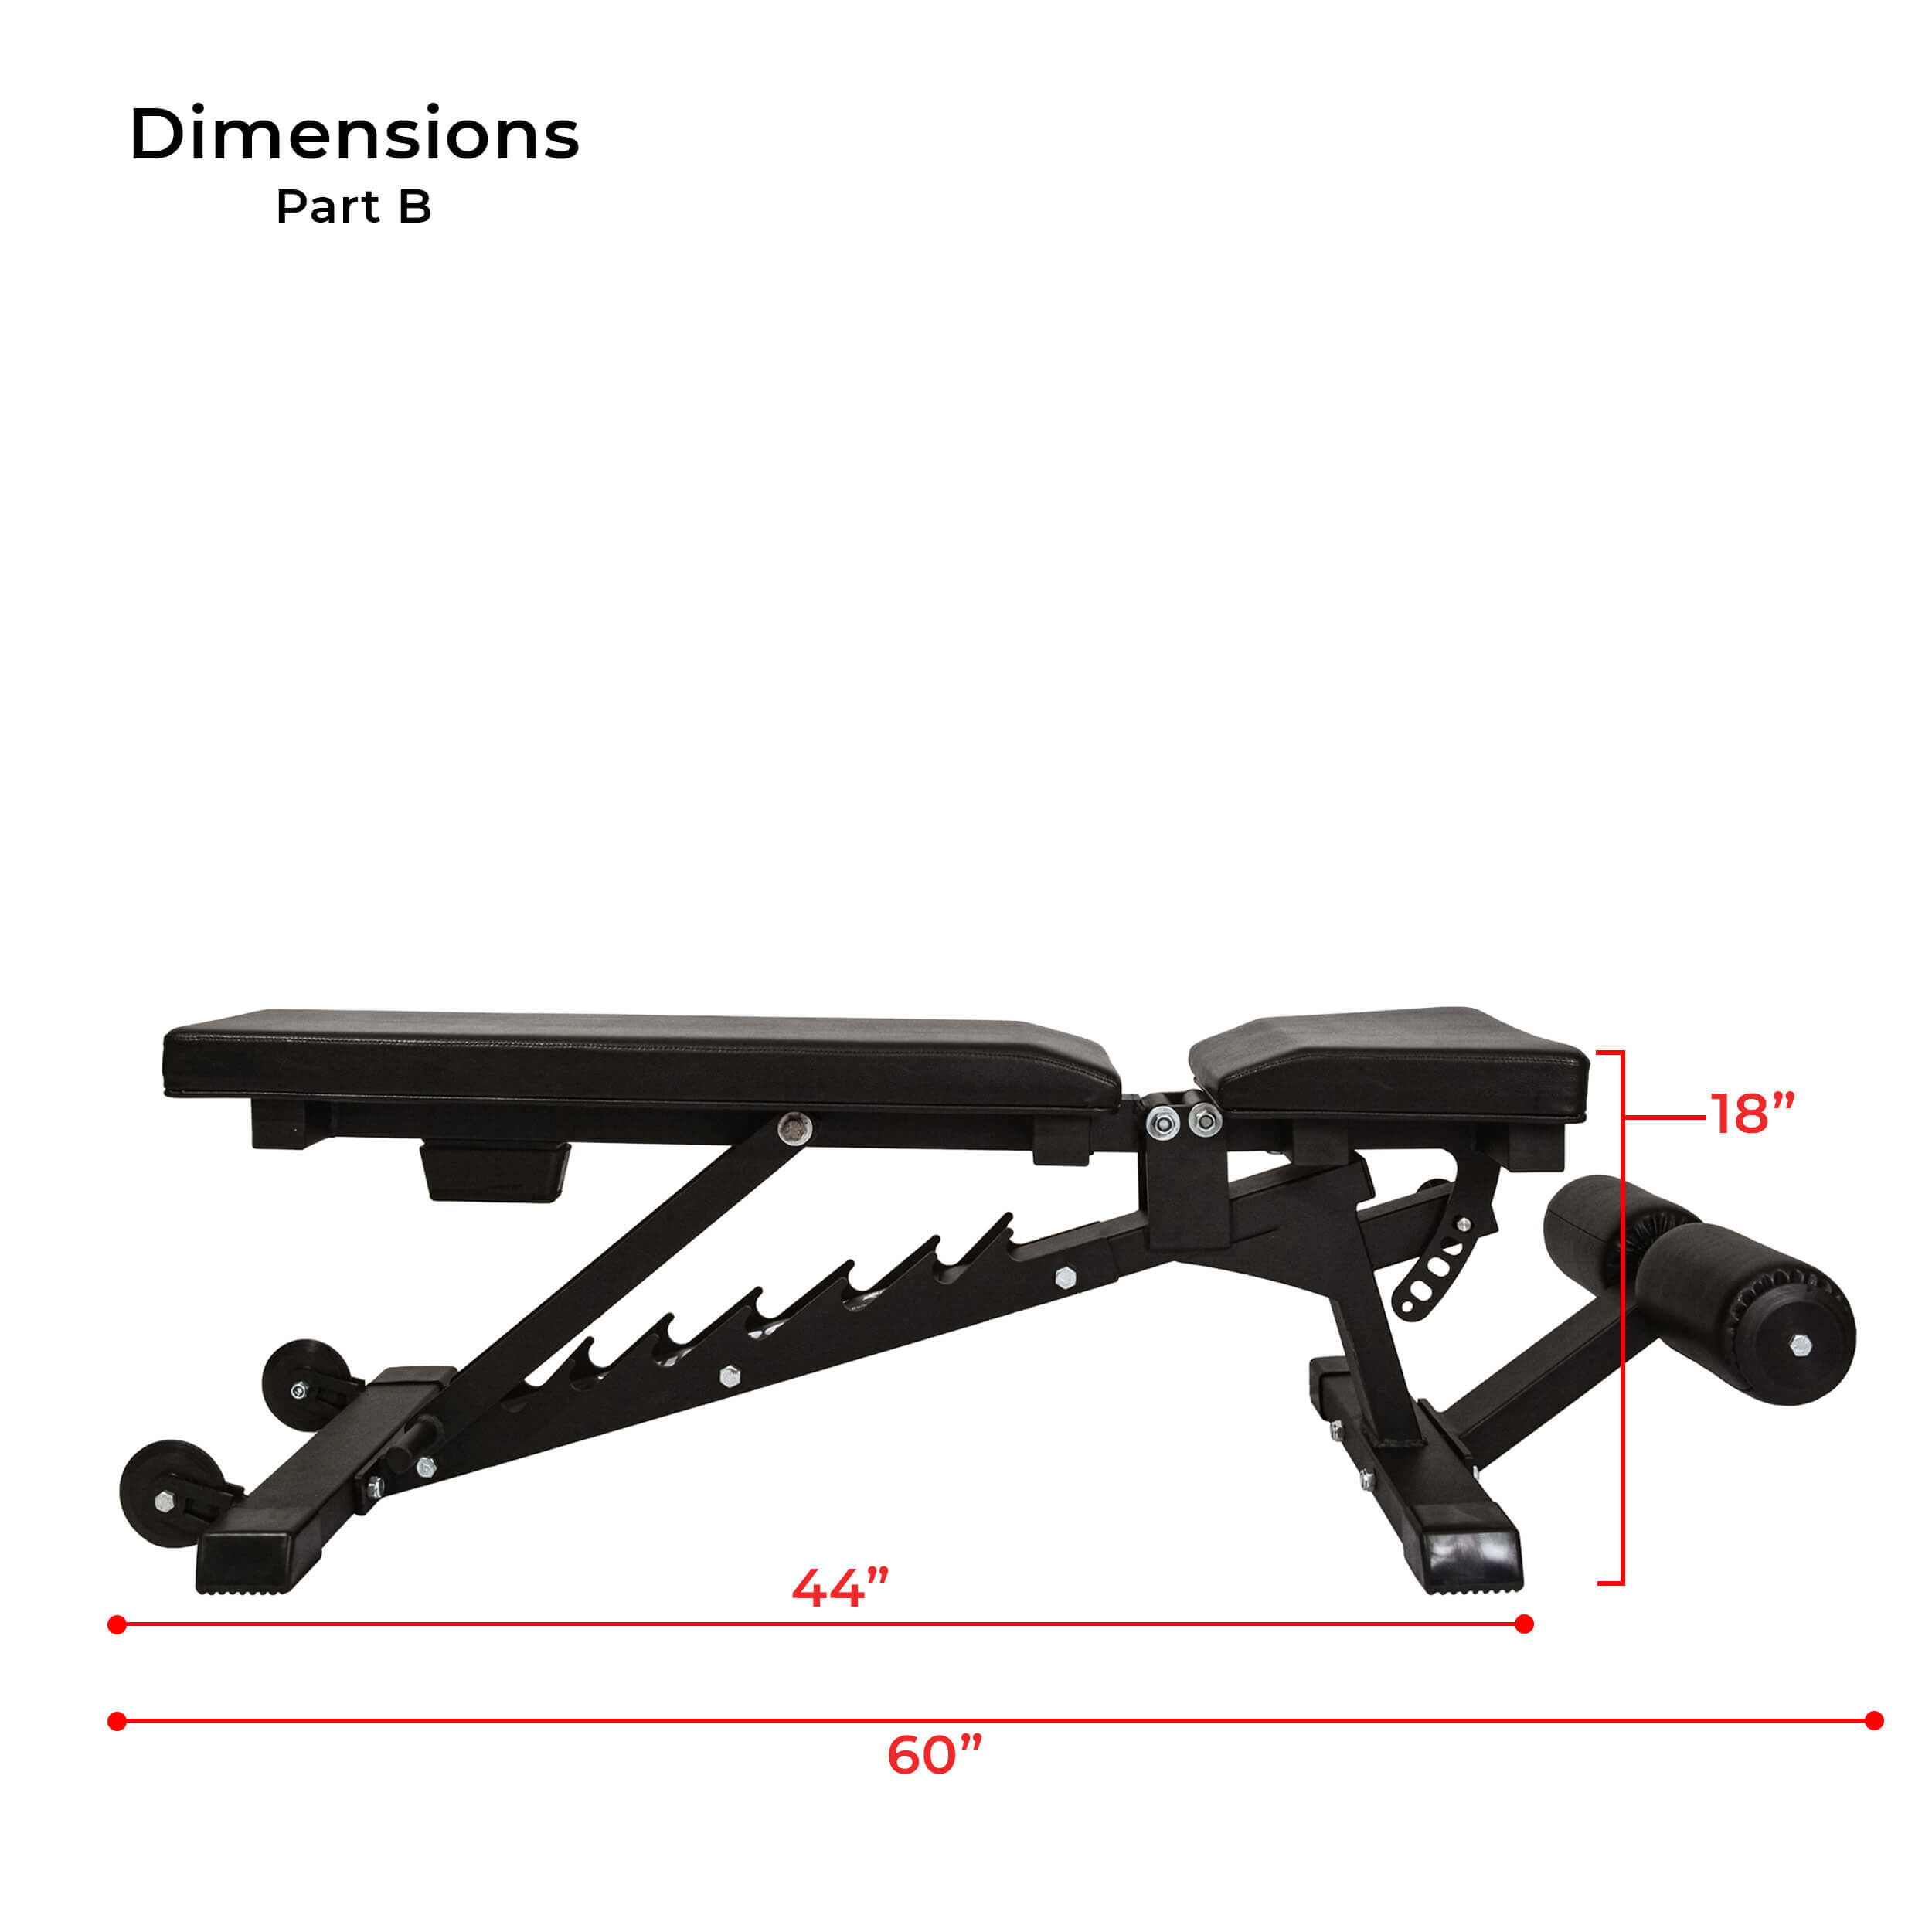 Adjustable Bench dimensions